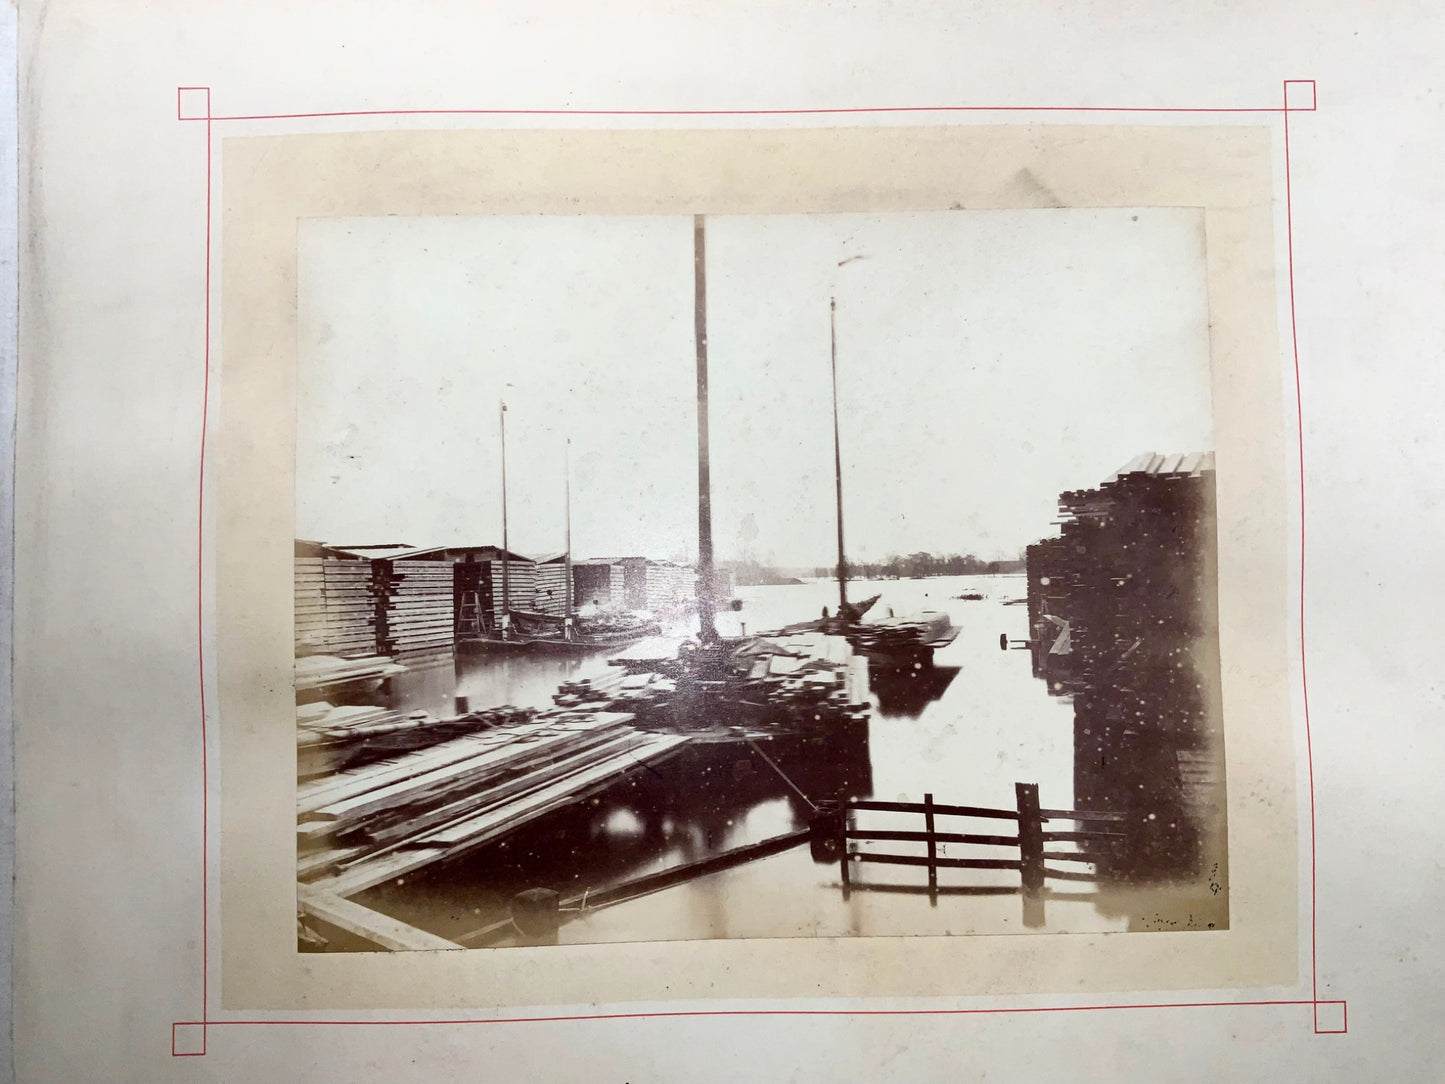 1878 Norwich, la Grande Inondation de 1878, album photographique, folio